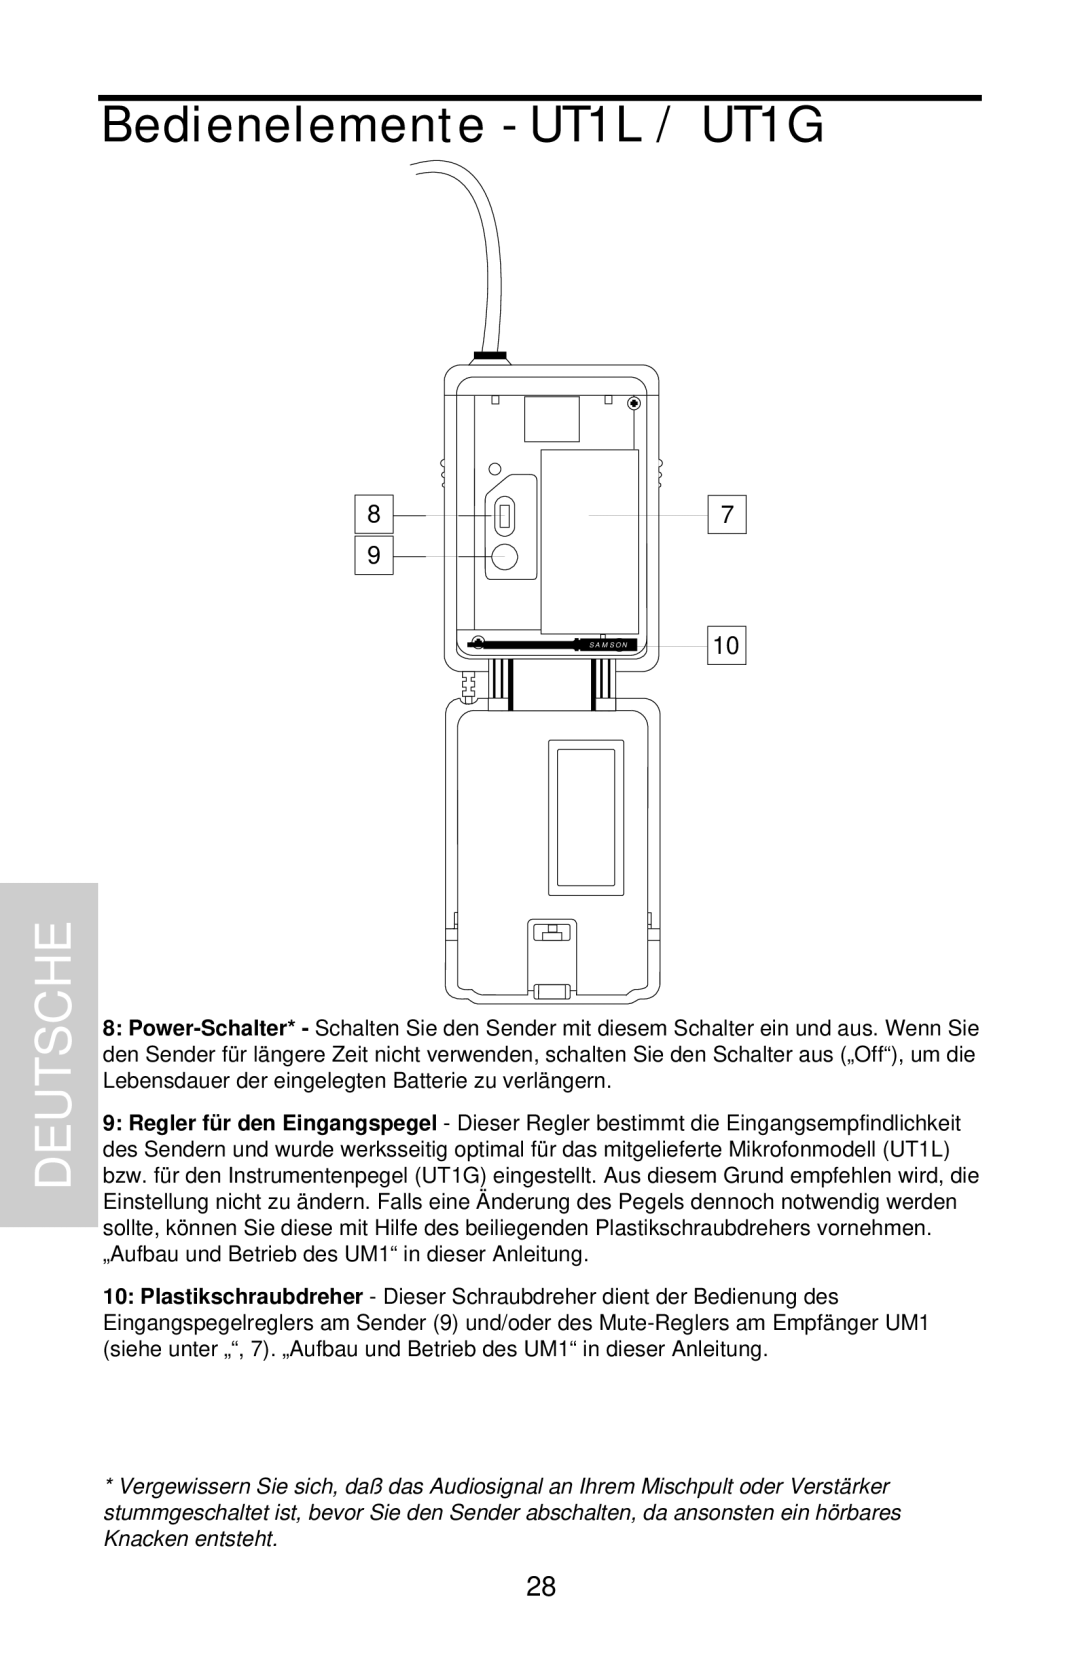 Samson UHF Series One owner manual Bedienelemente - UT1L / UT1G, Deutsche 